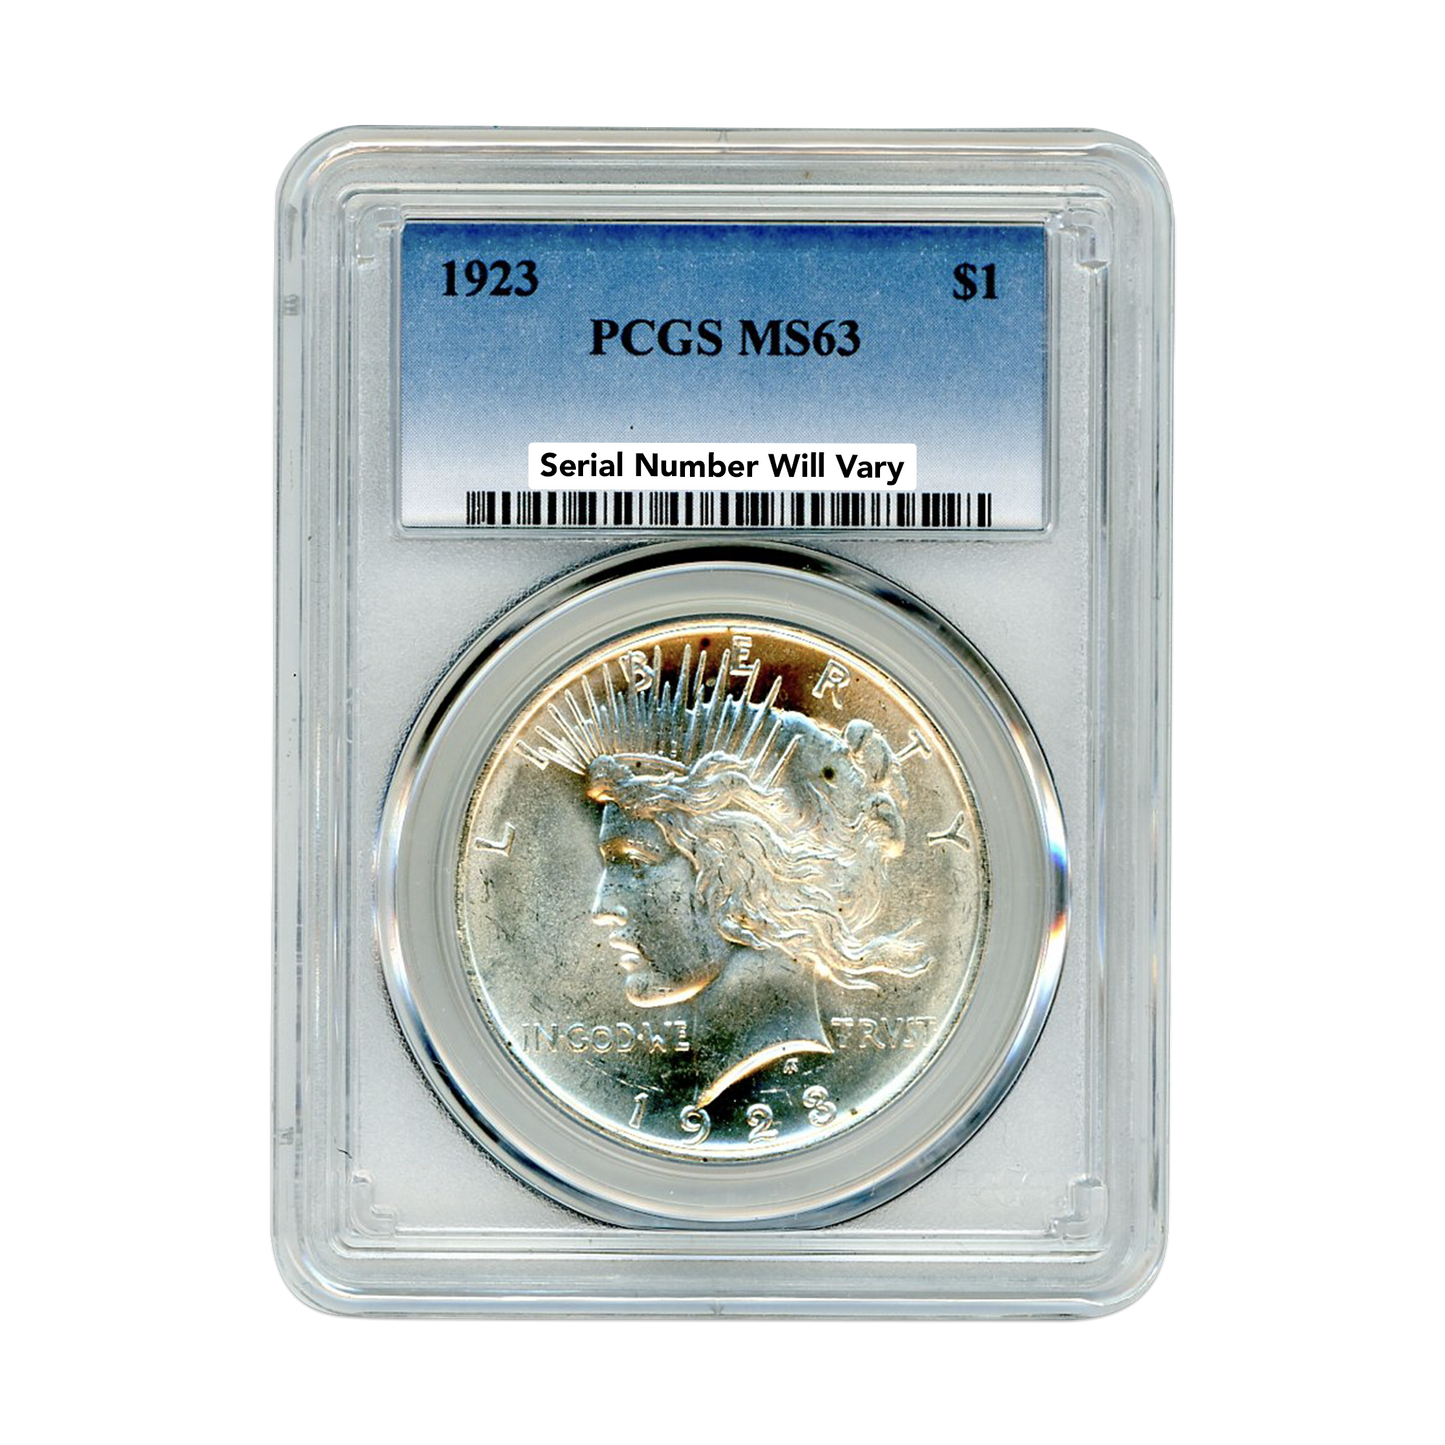 1923 Peace Silver Dollar - PCGS MS63